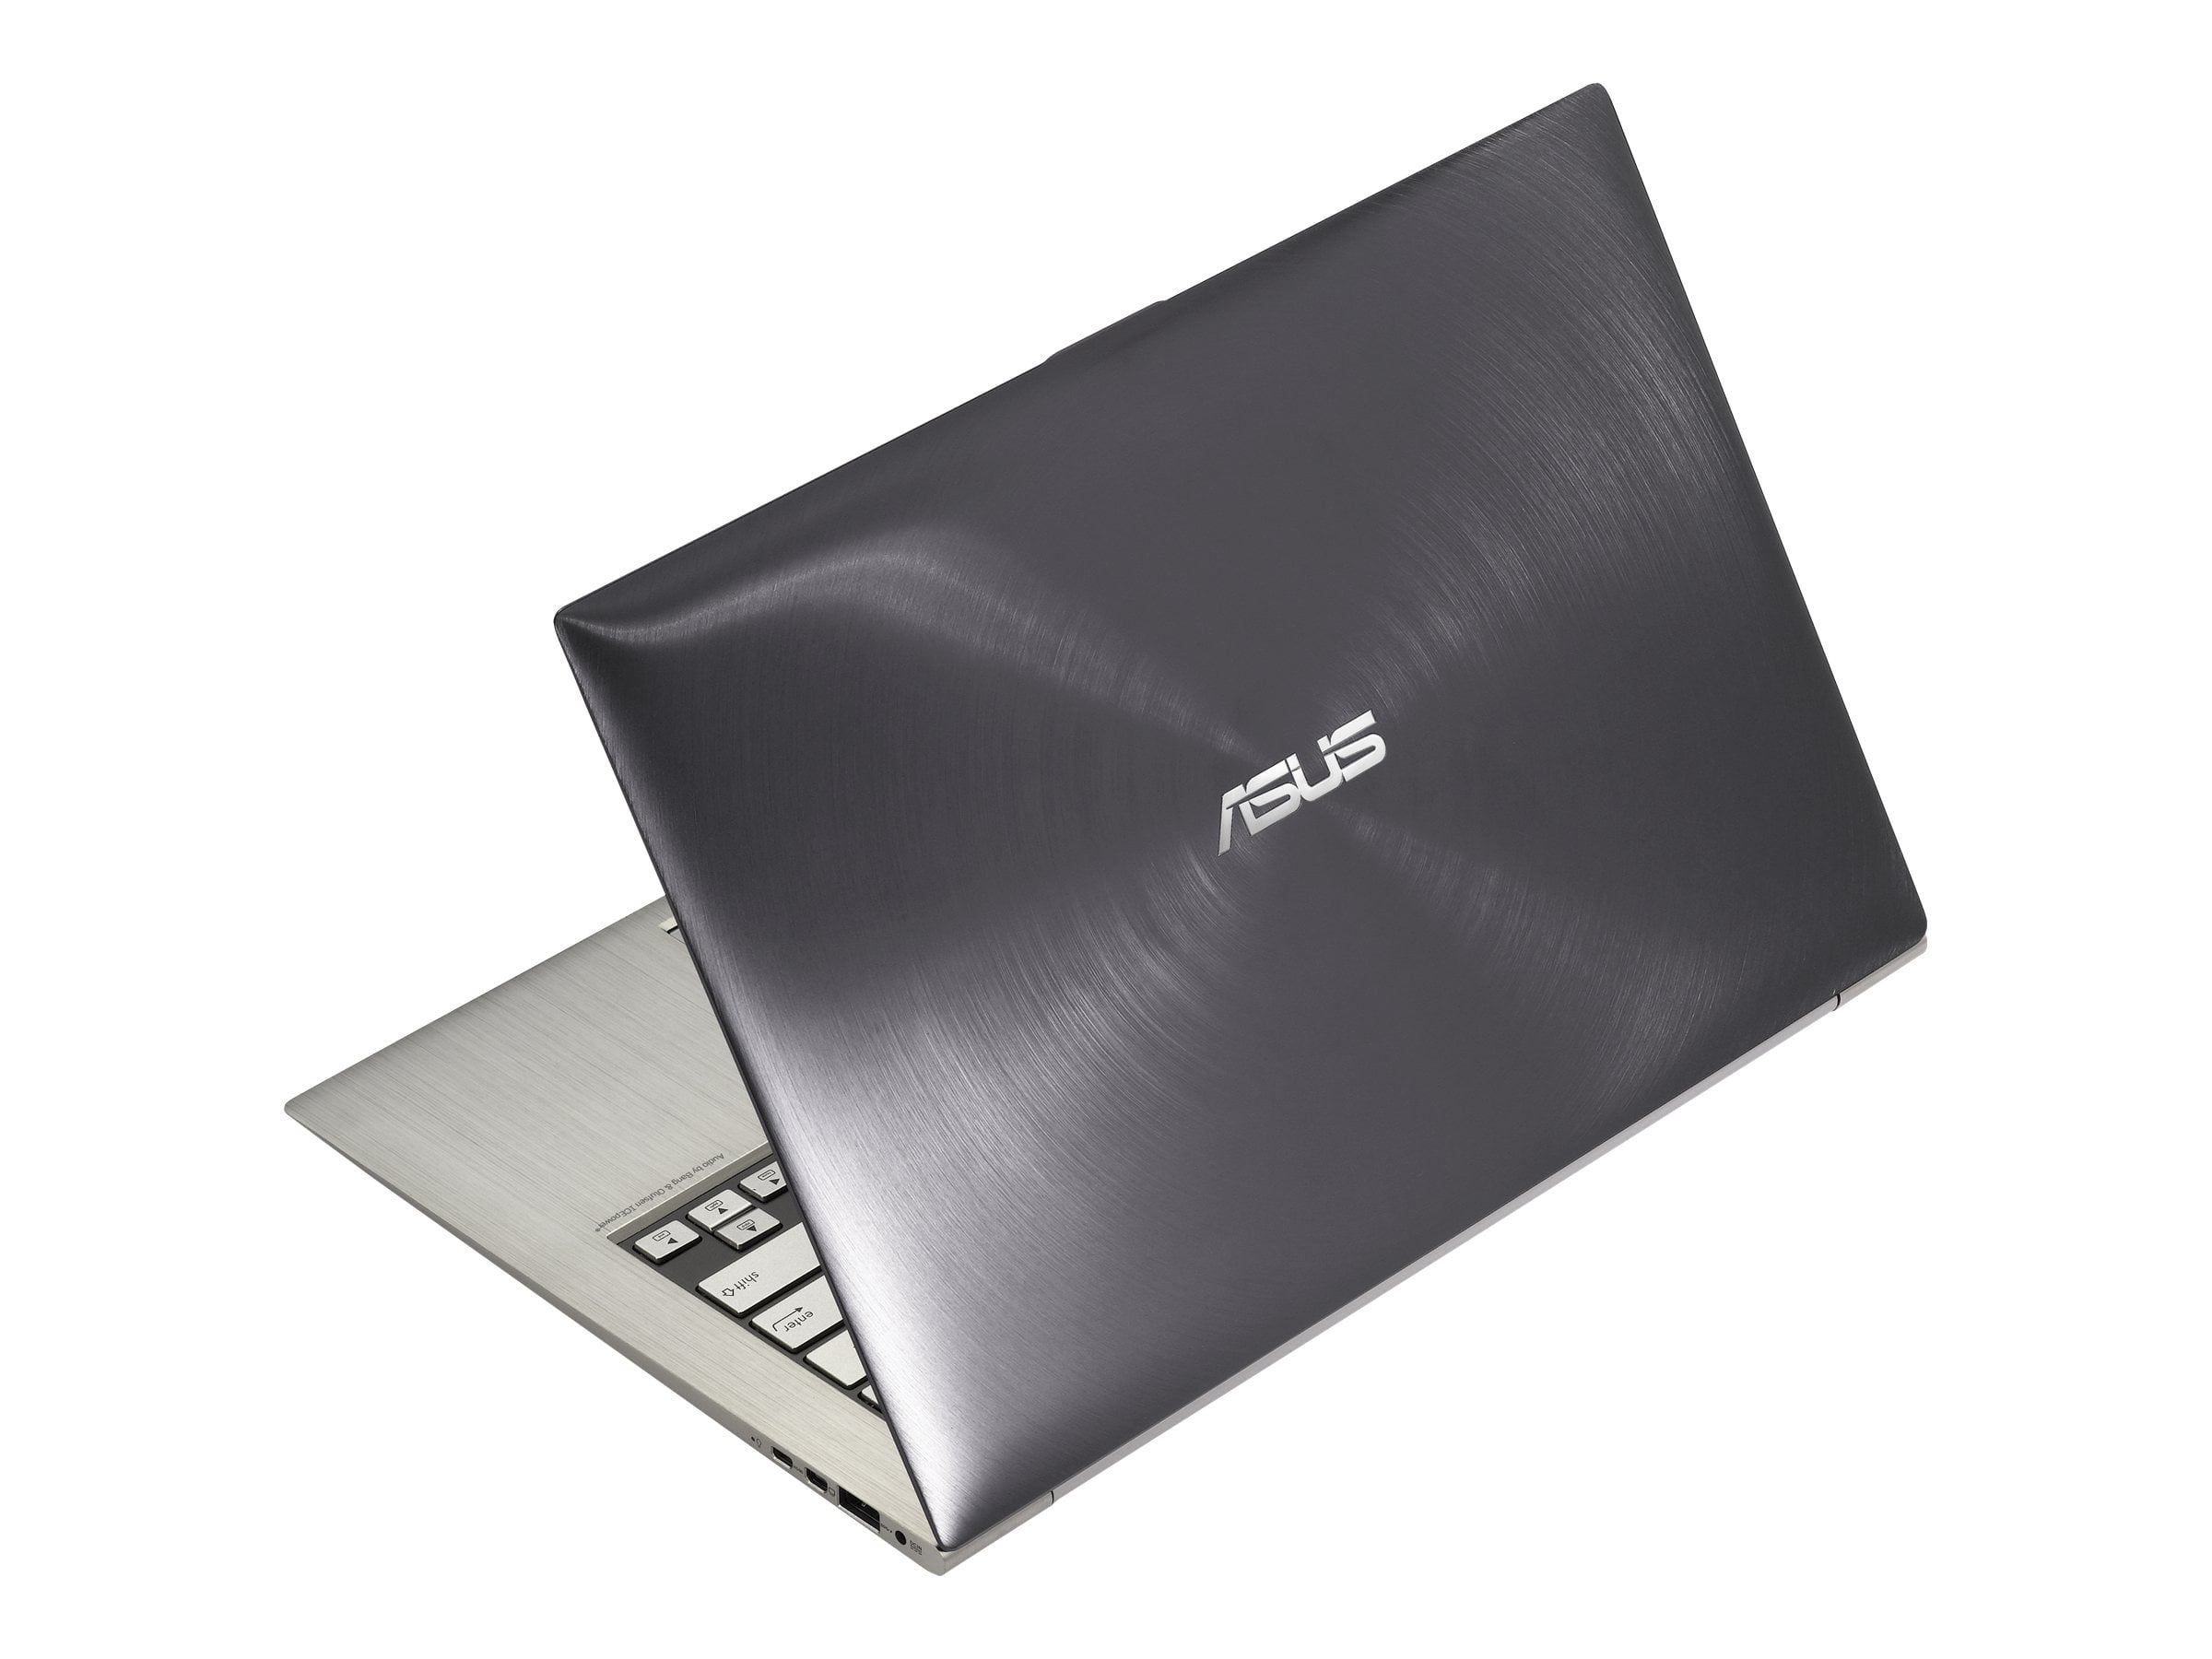 ASUS ZENBOOK UX31E-DH72 - Ultrabook - Intel Core i7 2677M / 1.8 GHz Win 7 Home Premium 64-bit - HD Graphics 3000 - 4 GB RAM - 256 GB SSD - 13.3" 1600 x 900 (HD+) - silver - Walmart.com